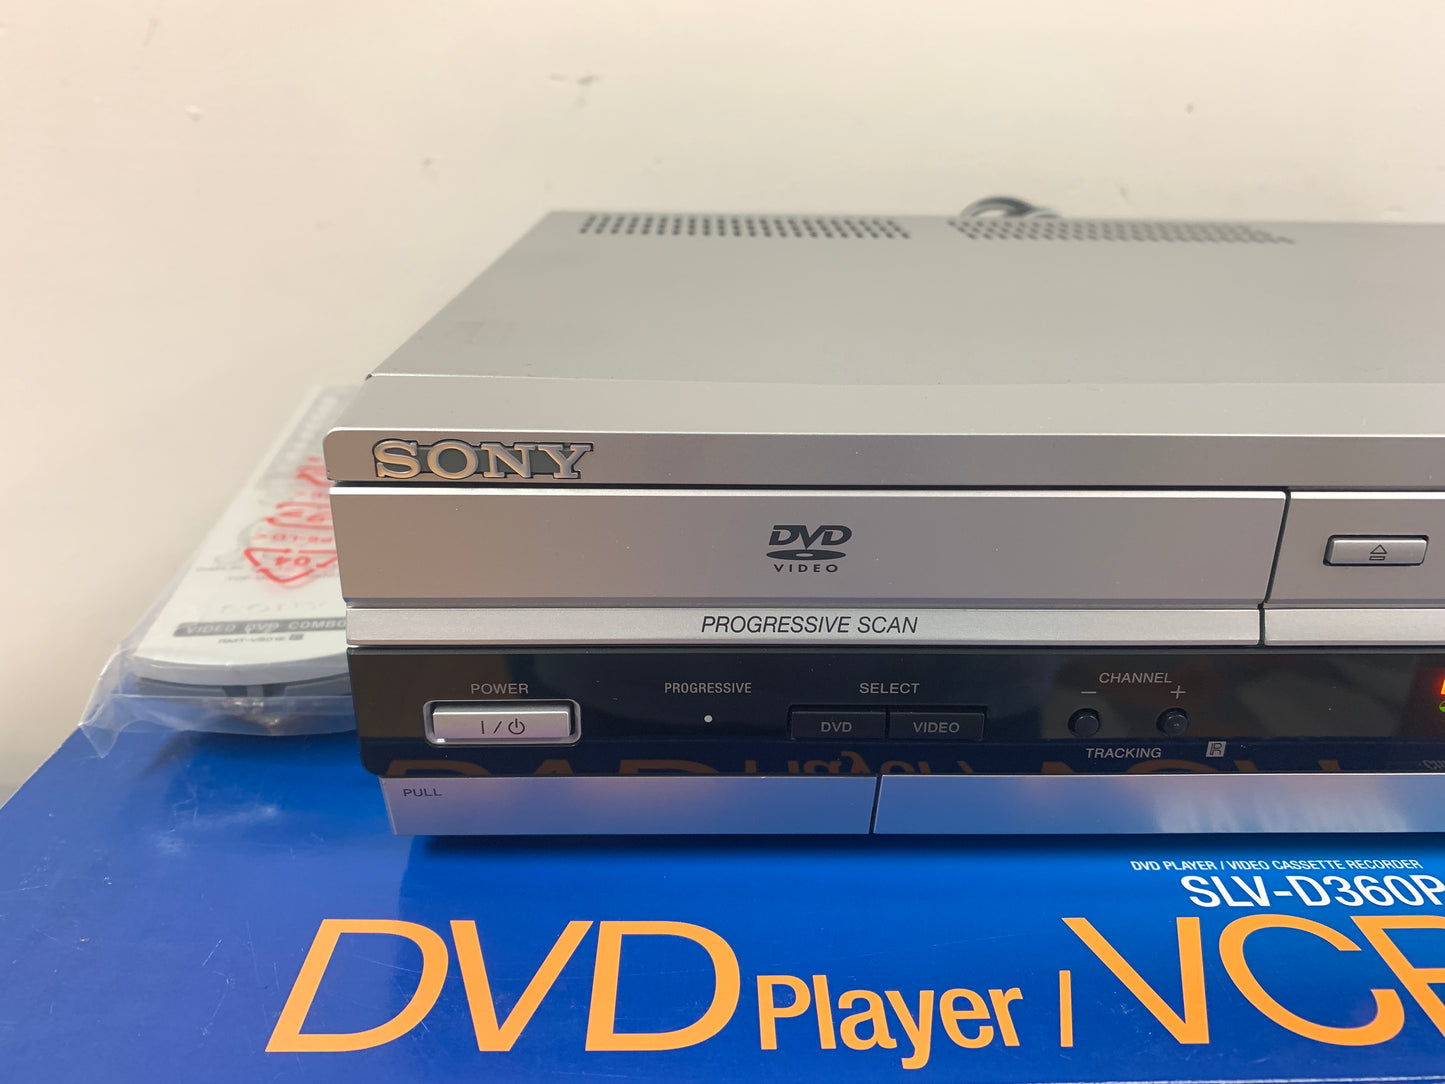 Sony SLV-D360P DVD/VHS Combo * Remote * Box